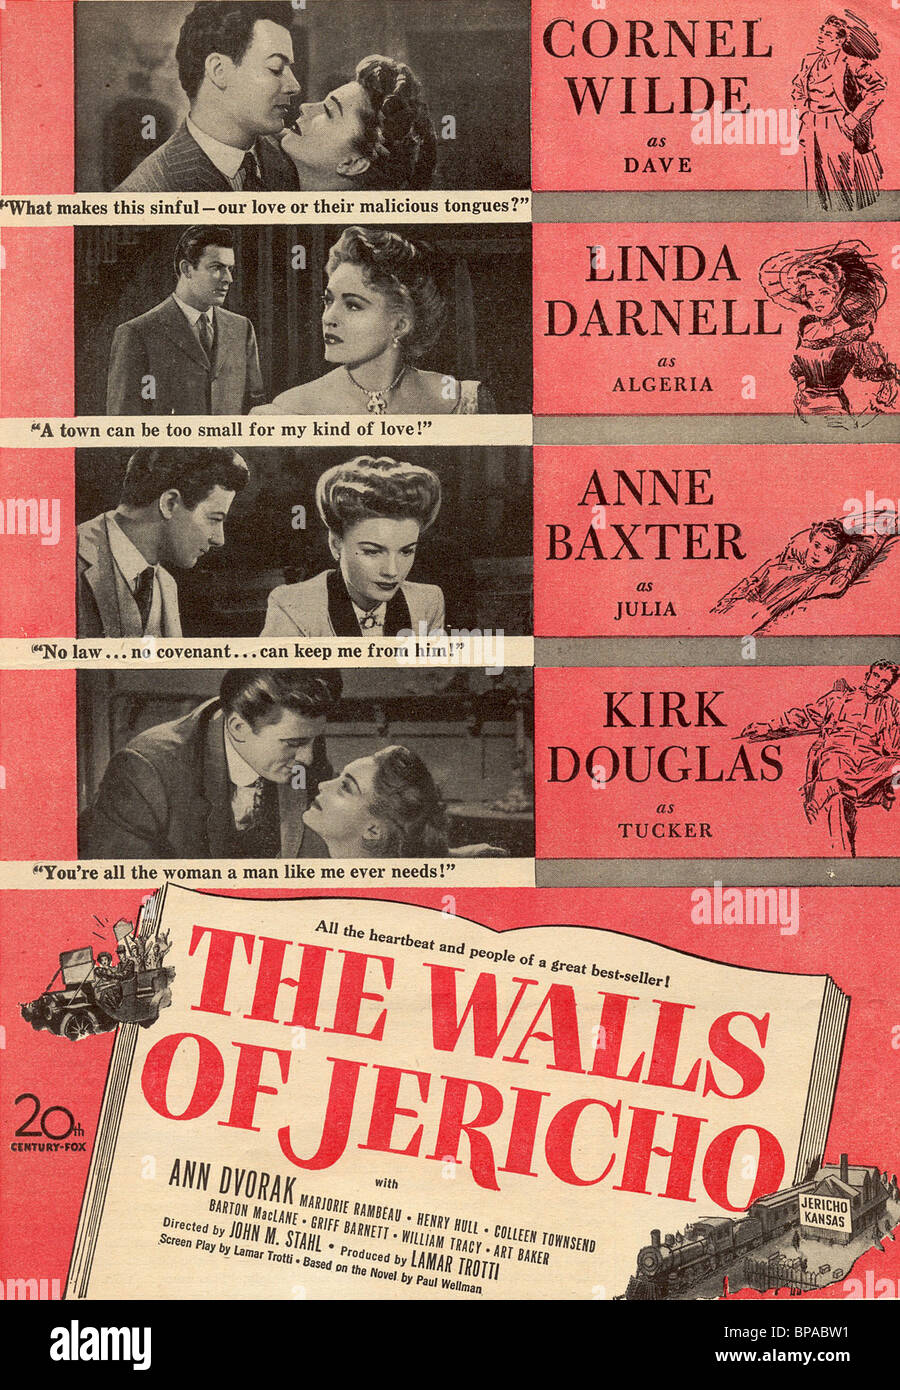 CORNEL WILDE, LINDA DARNELL, ANNE BAXTER, KIRK DOUGLAS FILM POSTER, THE WALLS OF JERICHO, 1948 Stock Photo